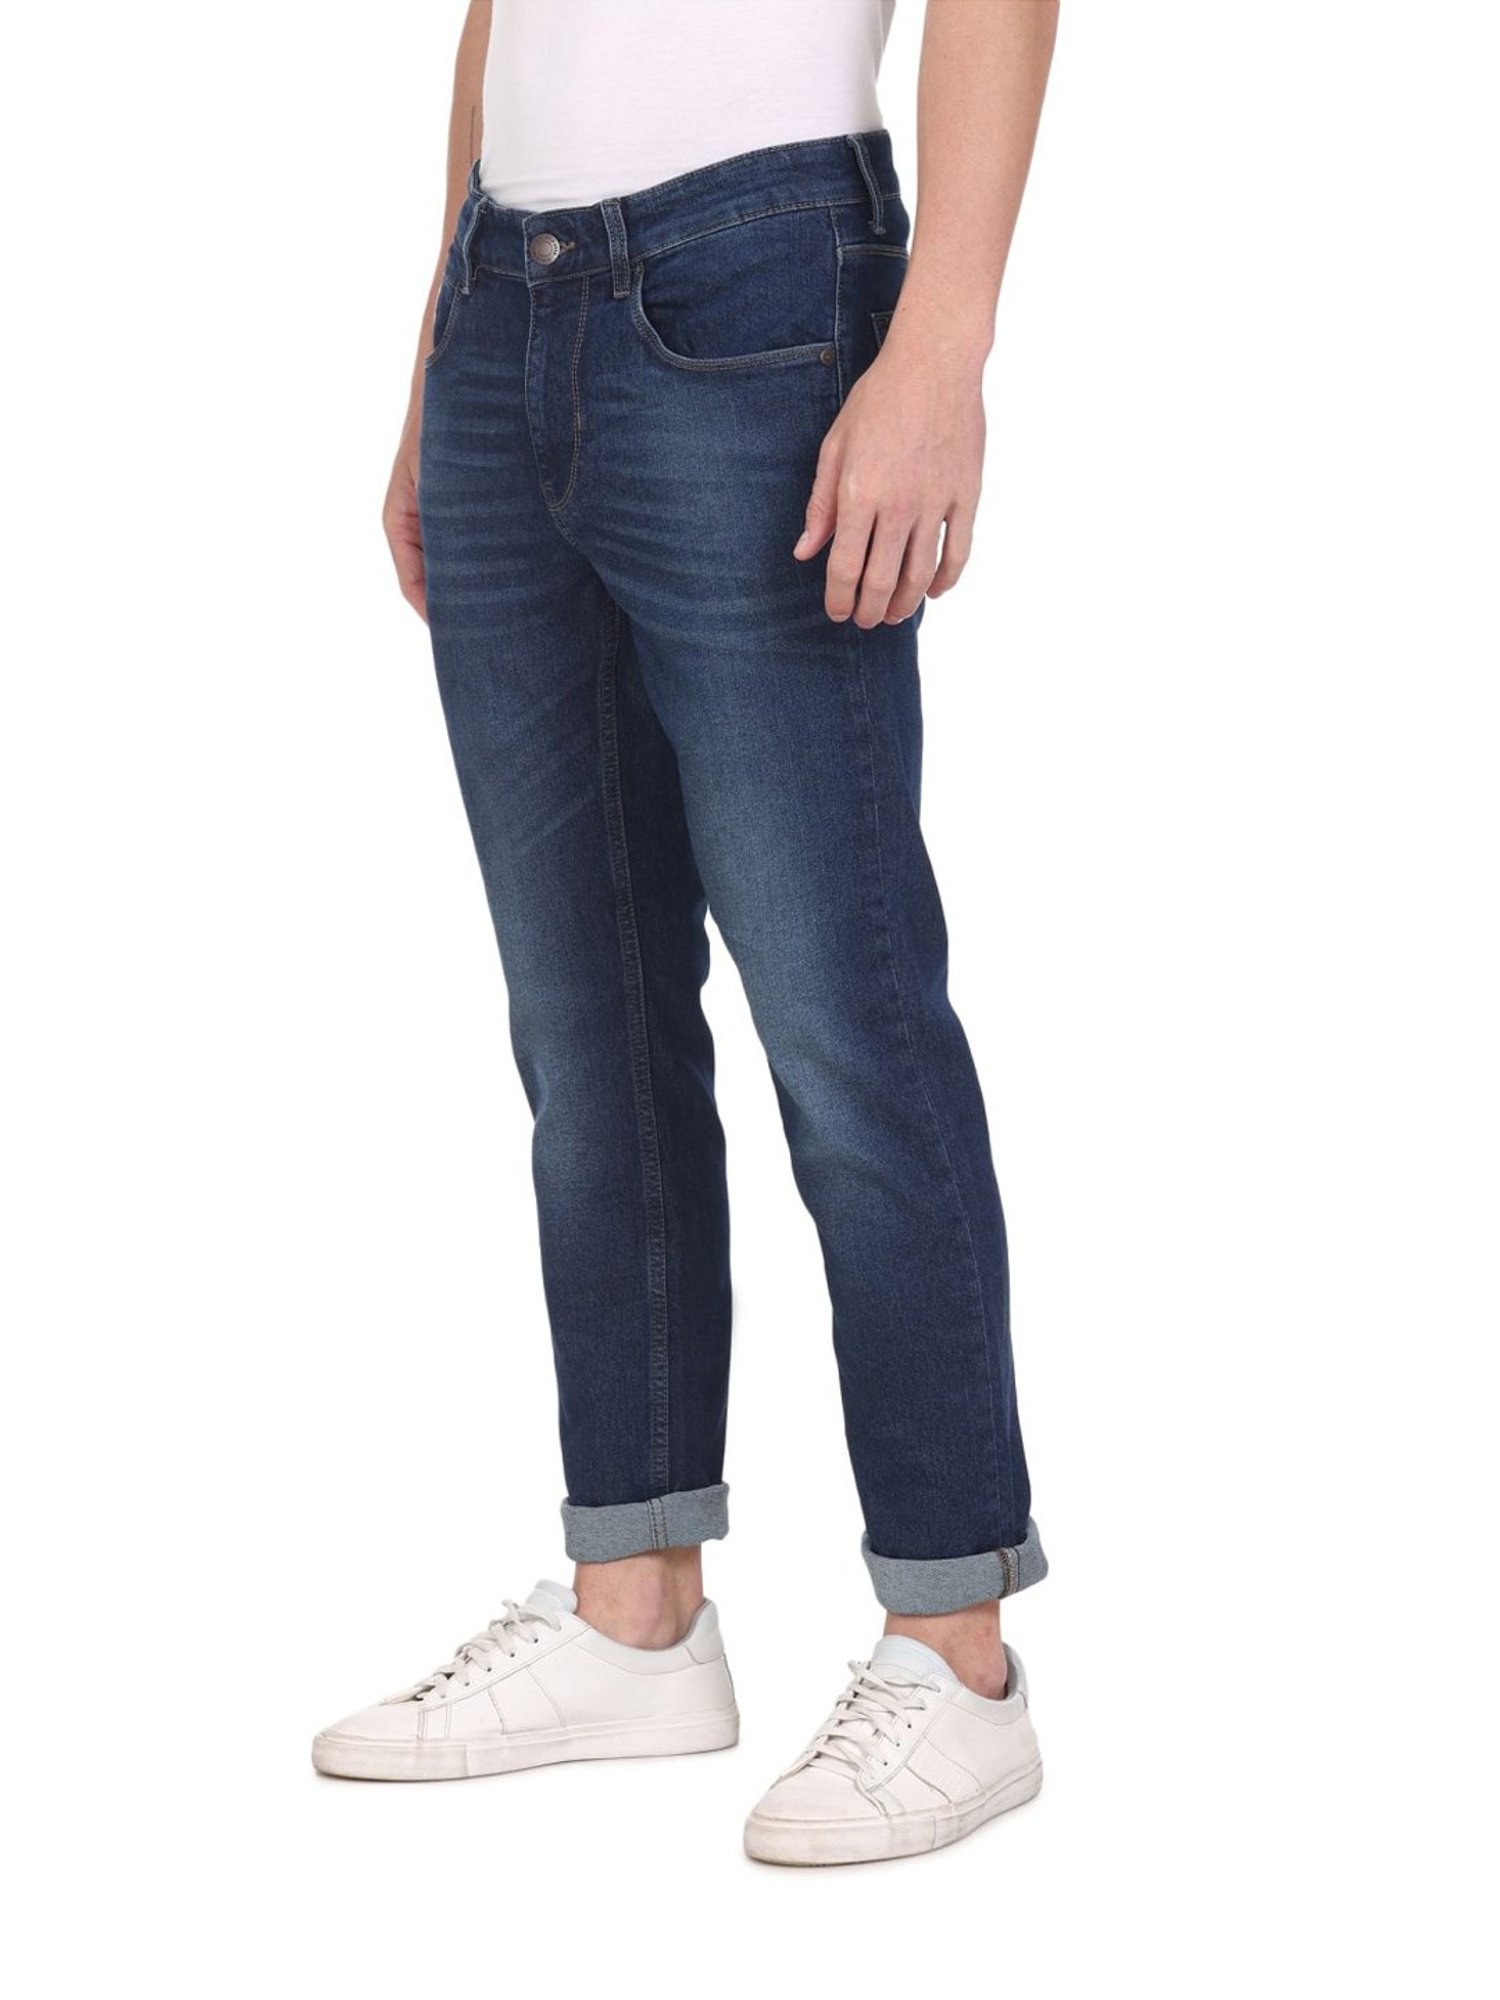 Bare Denim] Men's Dark Wash Slim Fit Jeans 32x34 | Slim fit jeans, Mens  denim, Denim jeans men